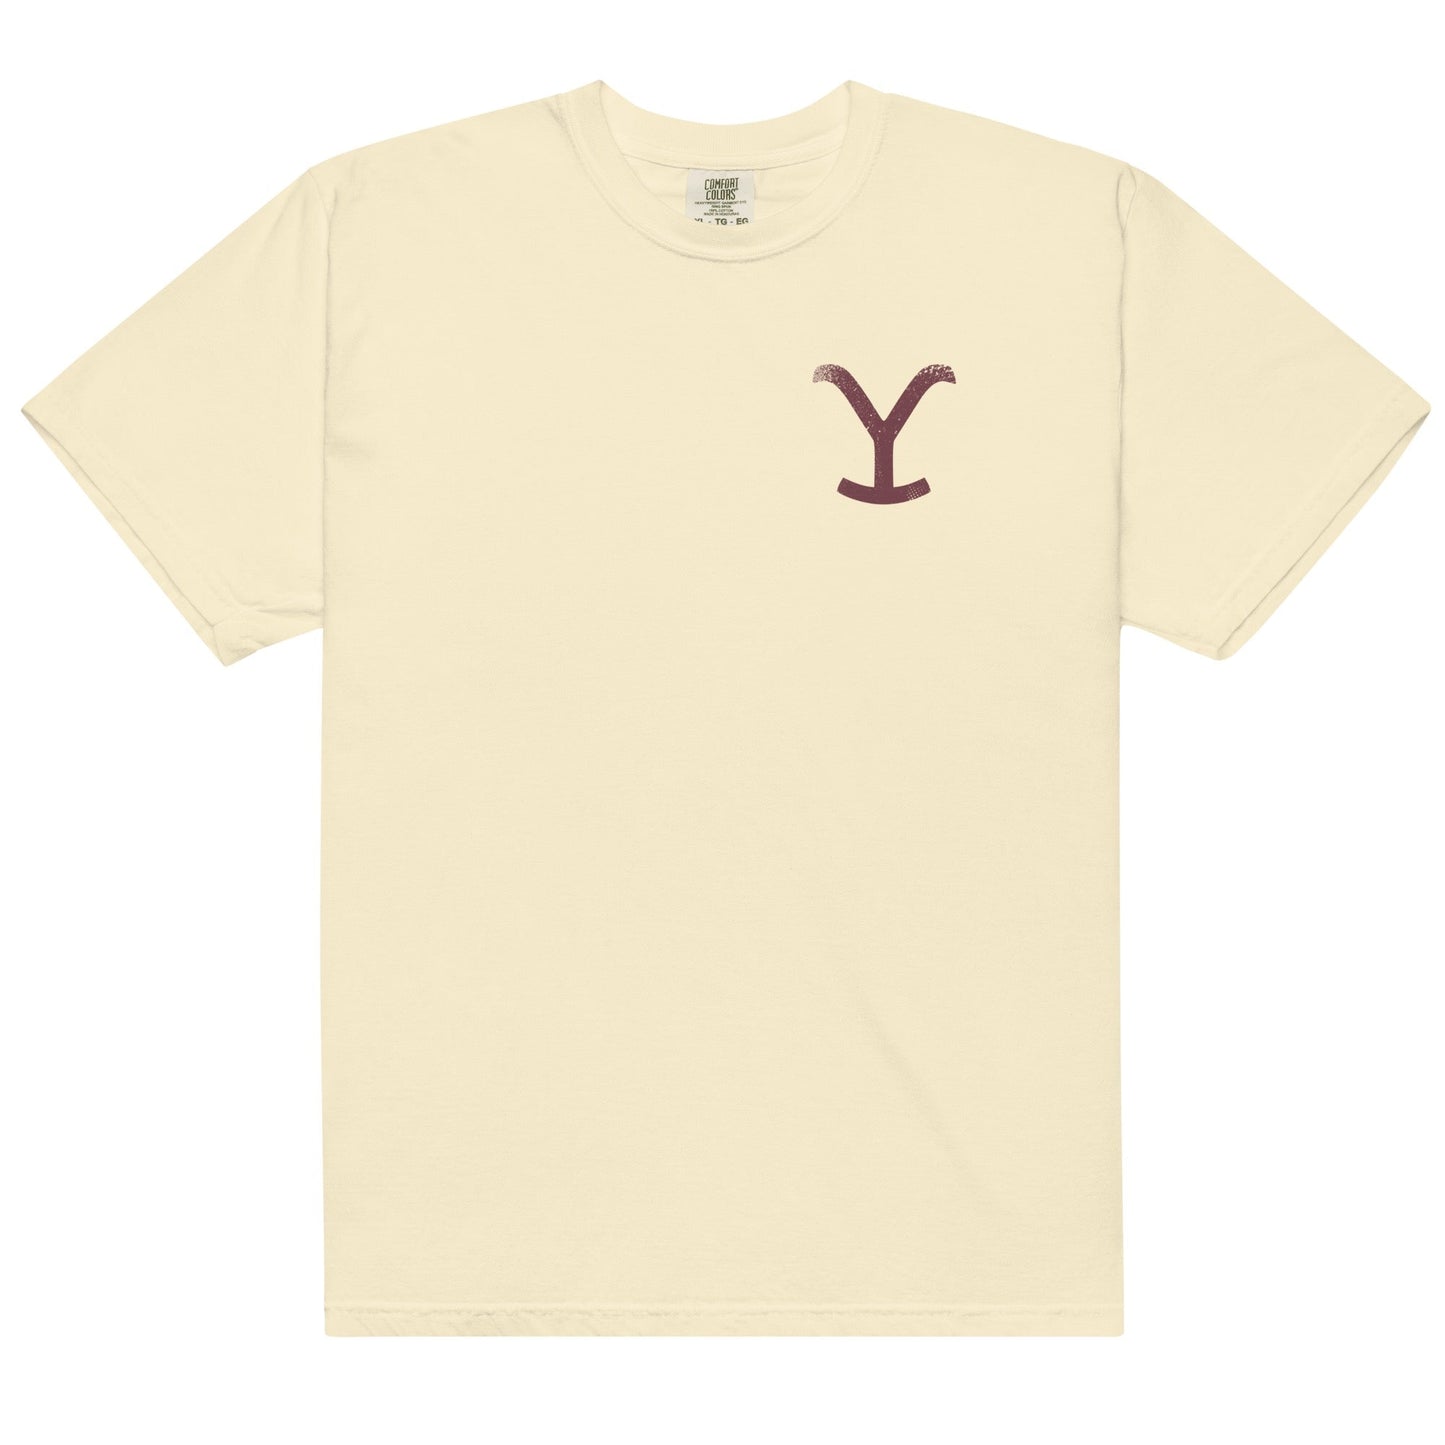 Yellowstone Mashup Comfort Colors T - Shirt - Paramount Shop